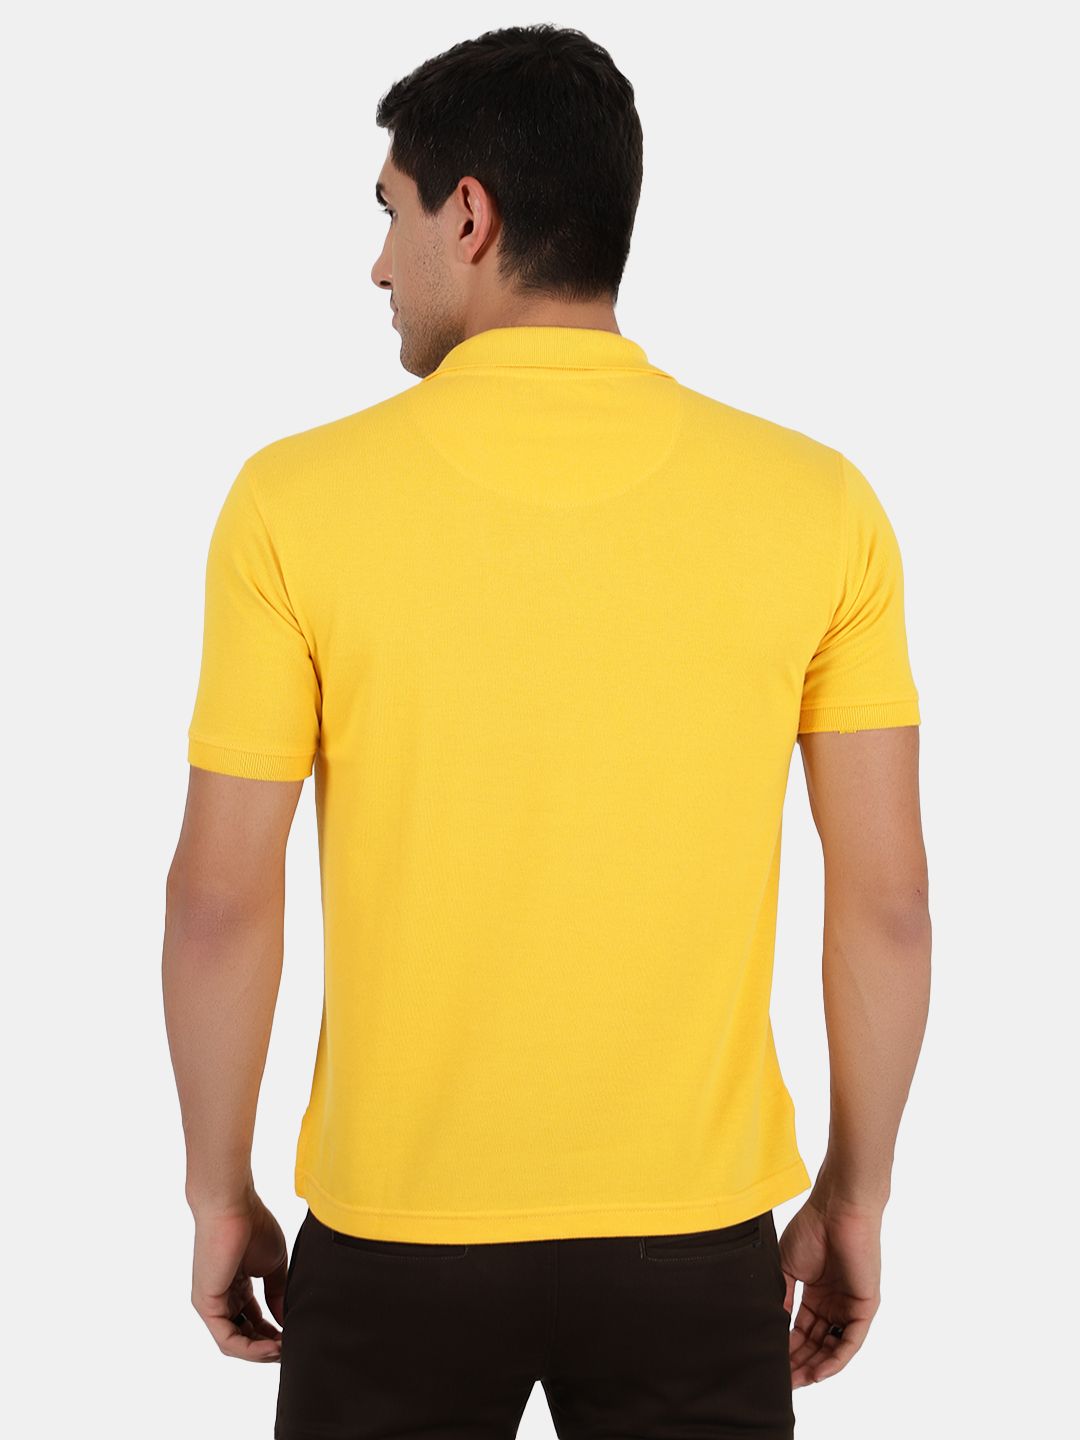 Mentoos Men Poly Cotton Solid Regular Fit Collar Neck Half Sleeves Polo T-Shirt Yellow Mentoos